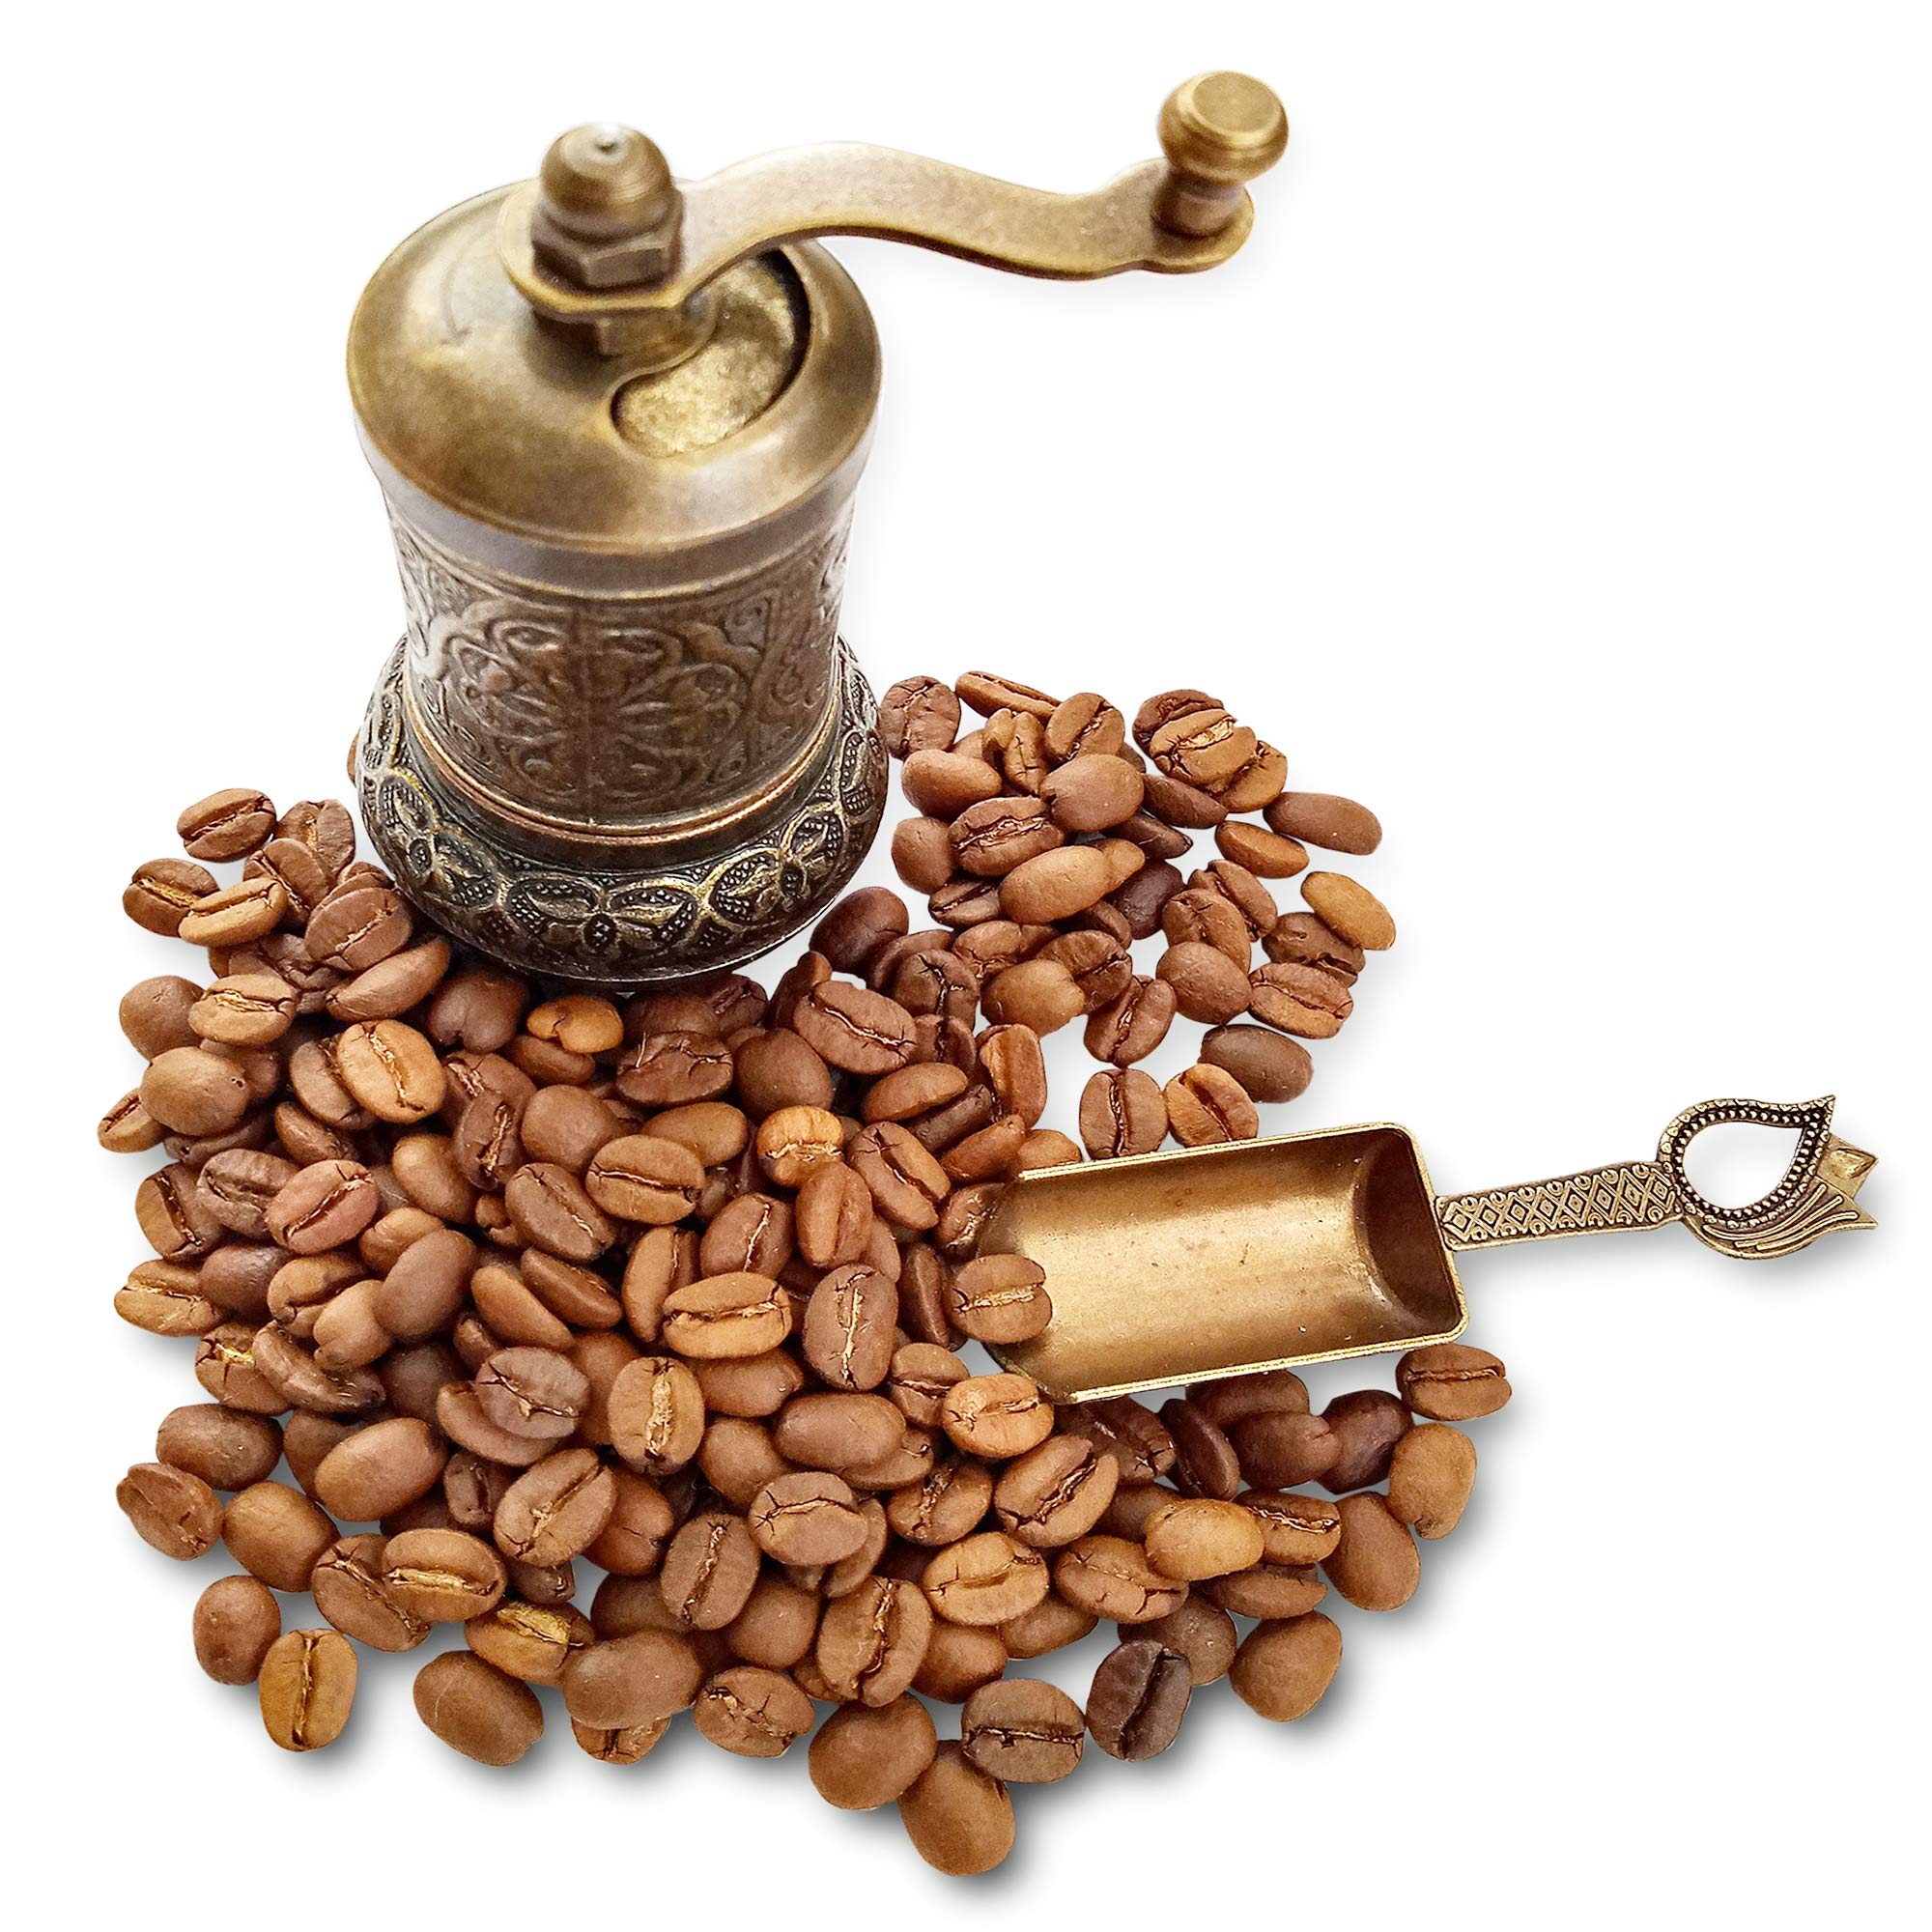 BestChoice Pepper Salt Coffee Grinder - 3 in One - Turkish Coffee Mill - with Spice Shovel Spoon - Salt Shaker - Zinc Alloy Casting Best Carving Metal - Adjustable Coarseness - Bronze Color Design